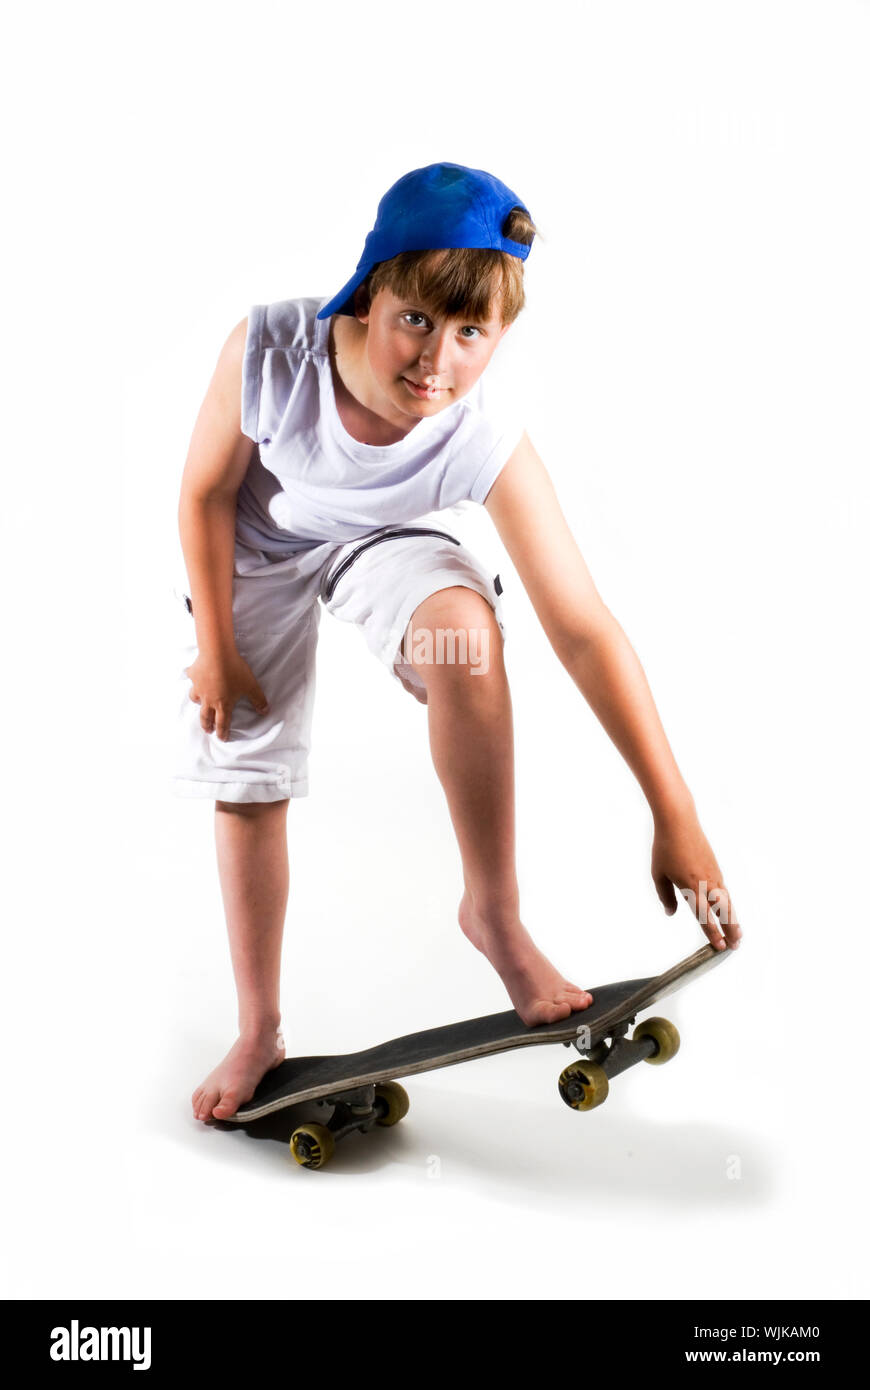 skate-boarding by a skater-boy Stock Photo - Alamy